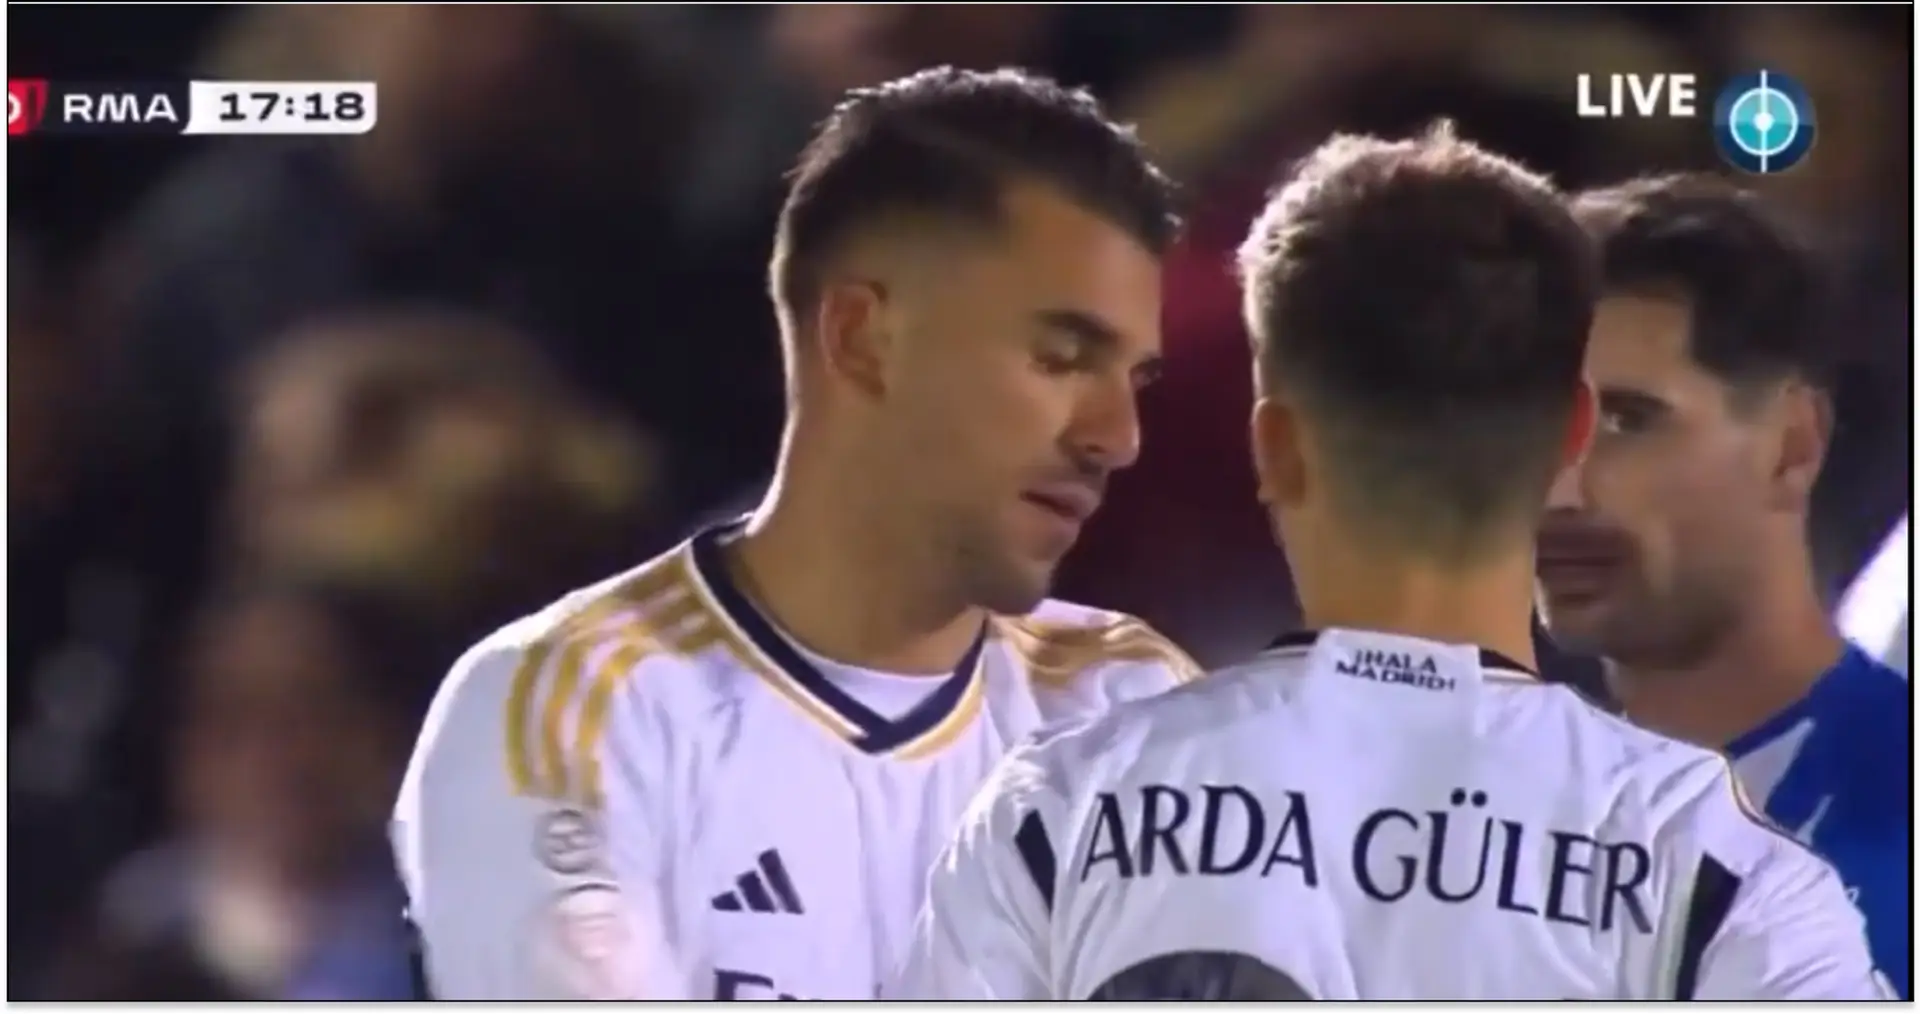 'Dani is a senior player': Madridista defends Ceballos over Guler free-kick row